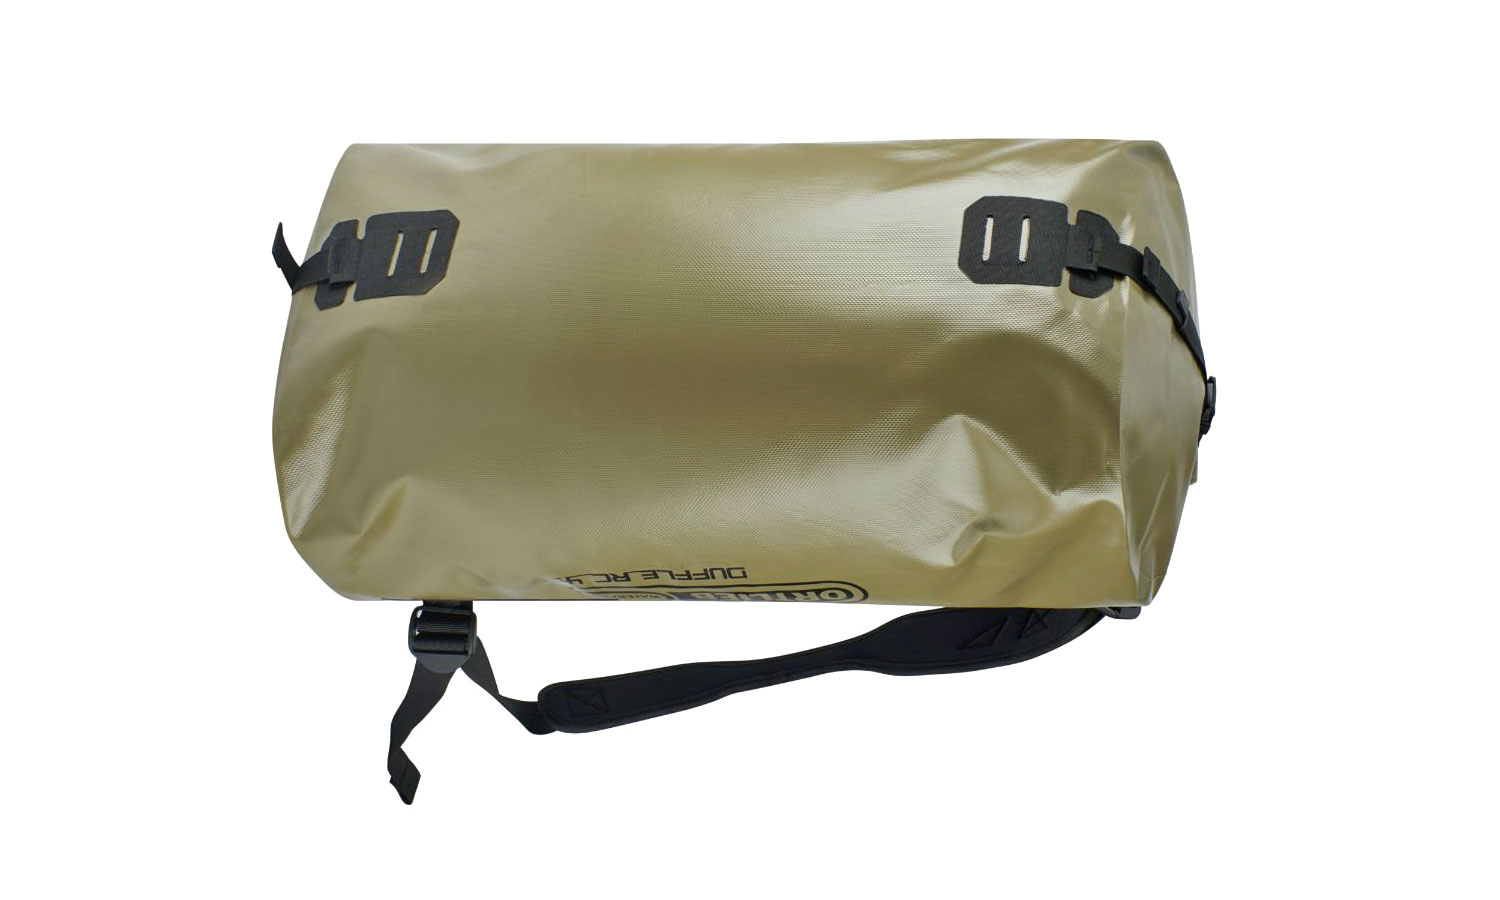 Ortlieb Duffle RC roll-top closure waterproof dufflebag backpack, made-in-Germany, olive backside